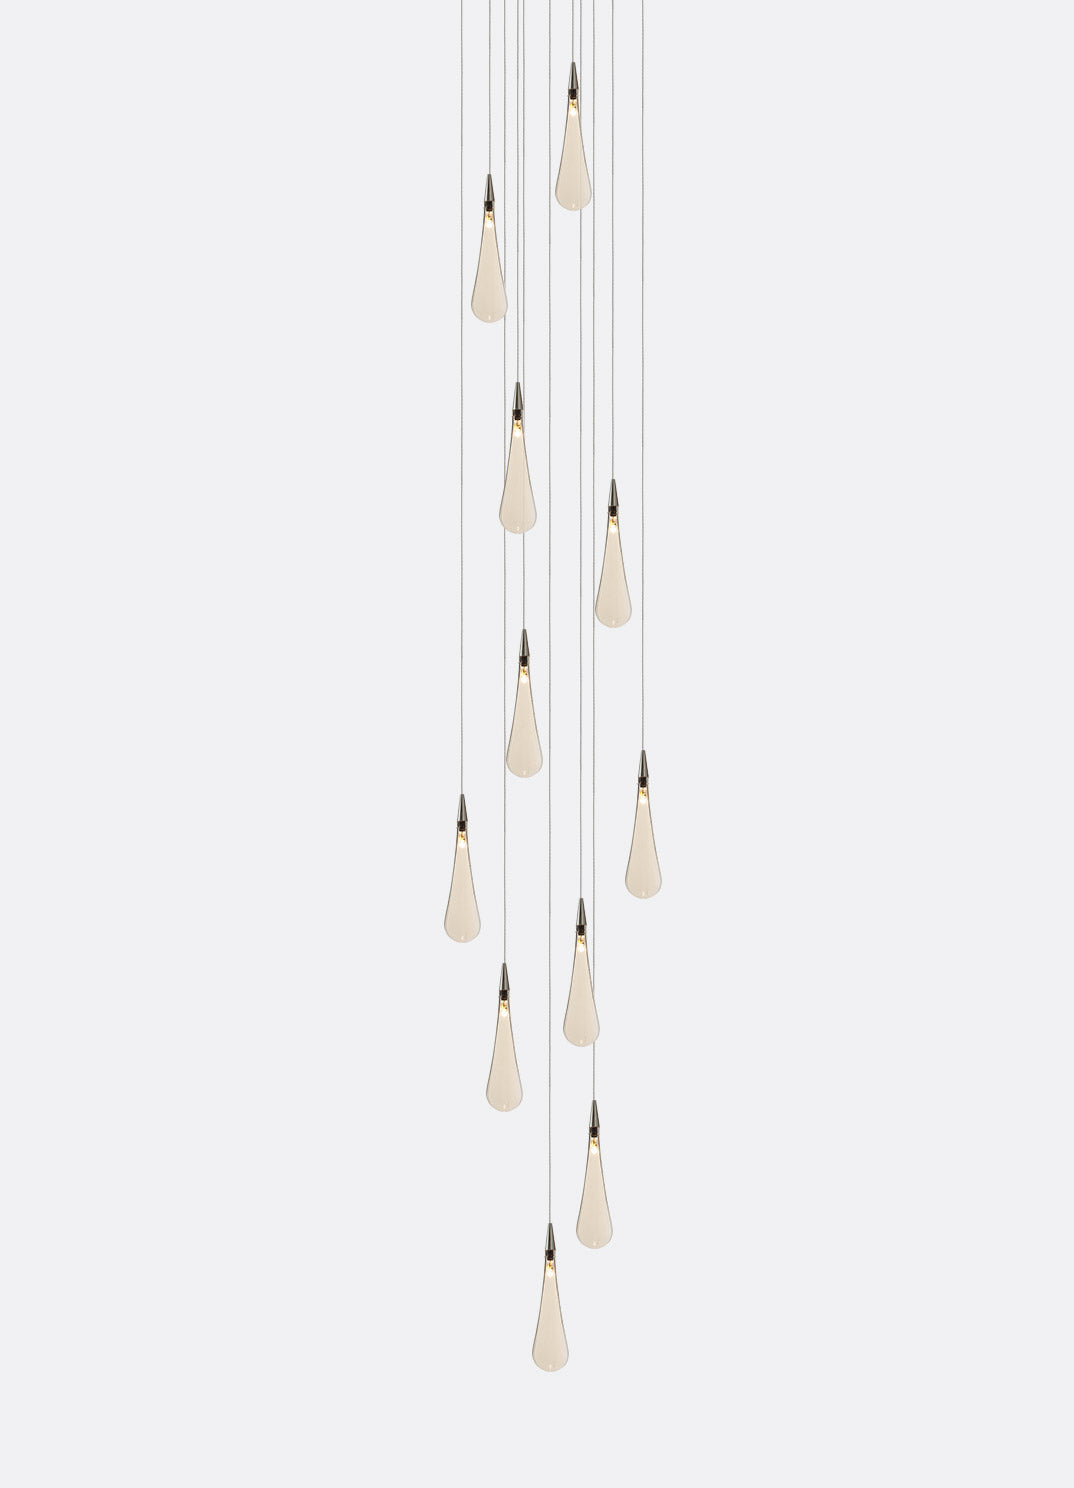 The Raindrop 11-Light Chandelier by Shakuff | Luxury Chandeliers | Willow & Albert Home